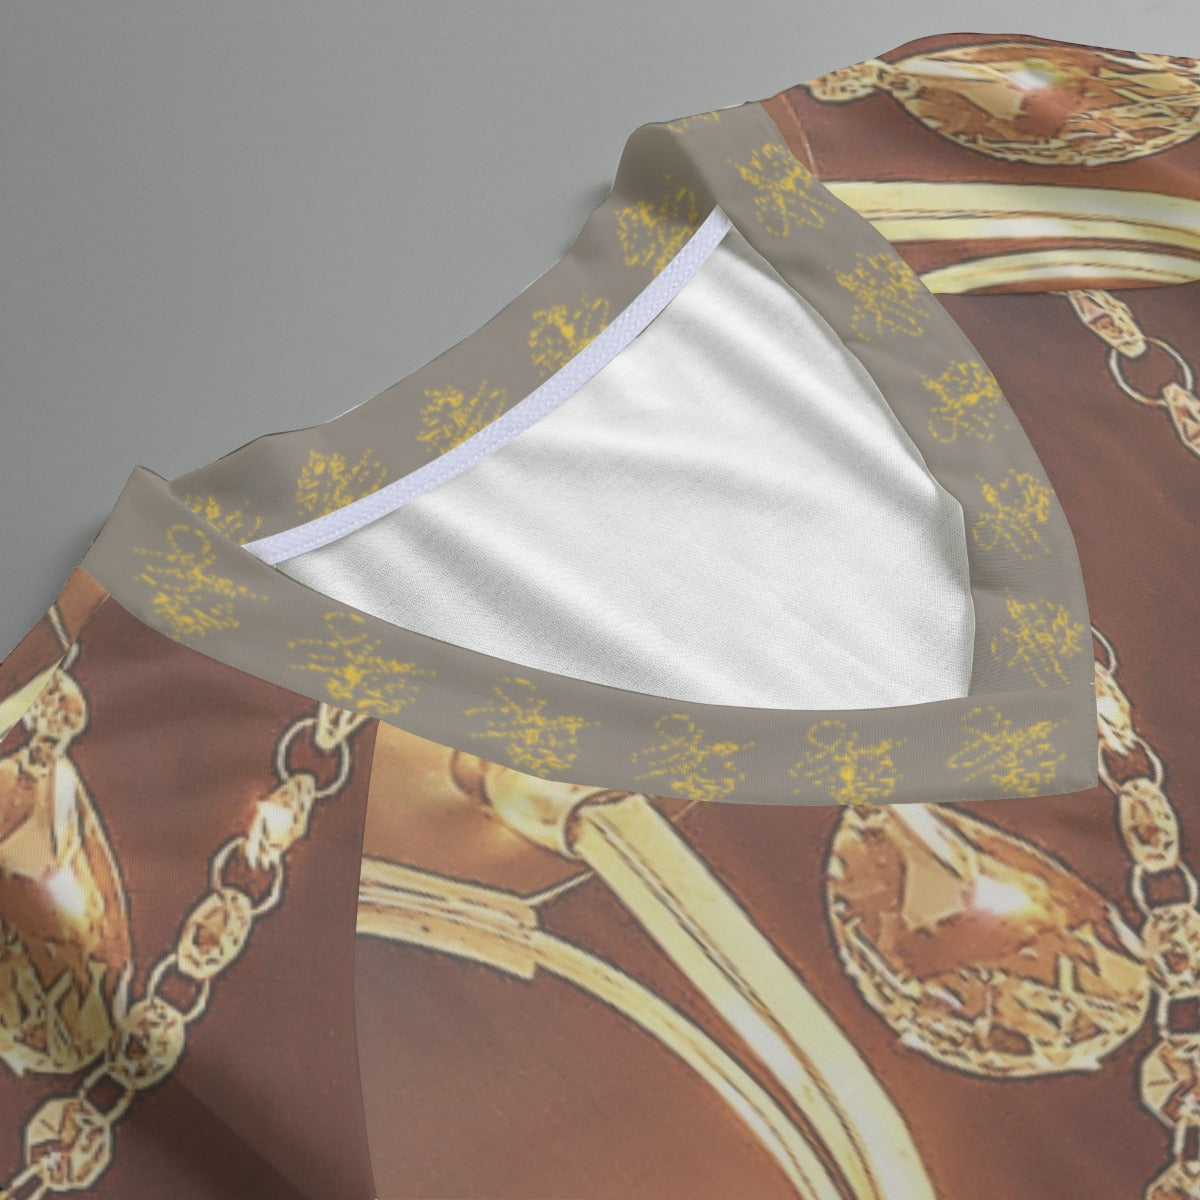 "Unmistakable" and Chandelier Liberace Print Ladies Tshirt